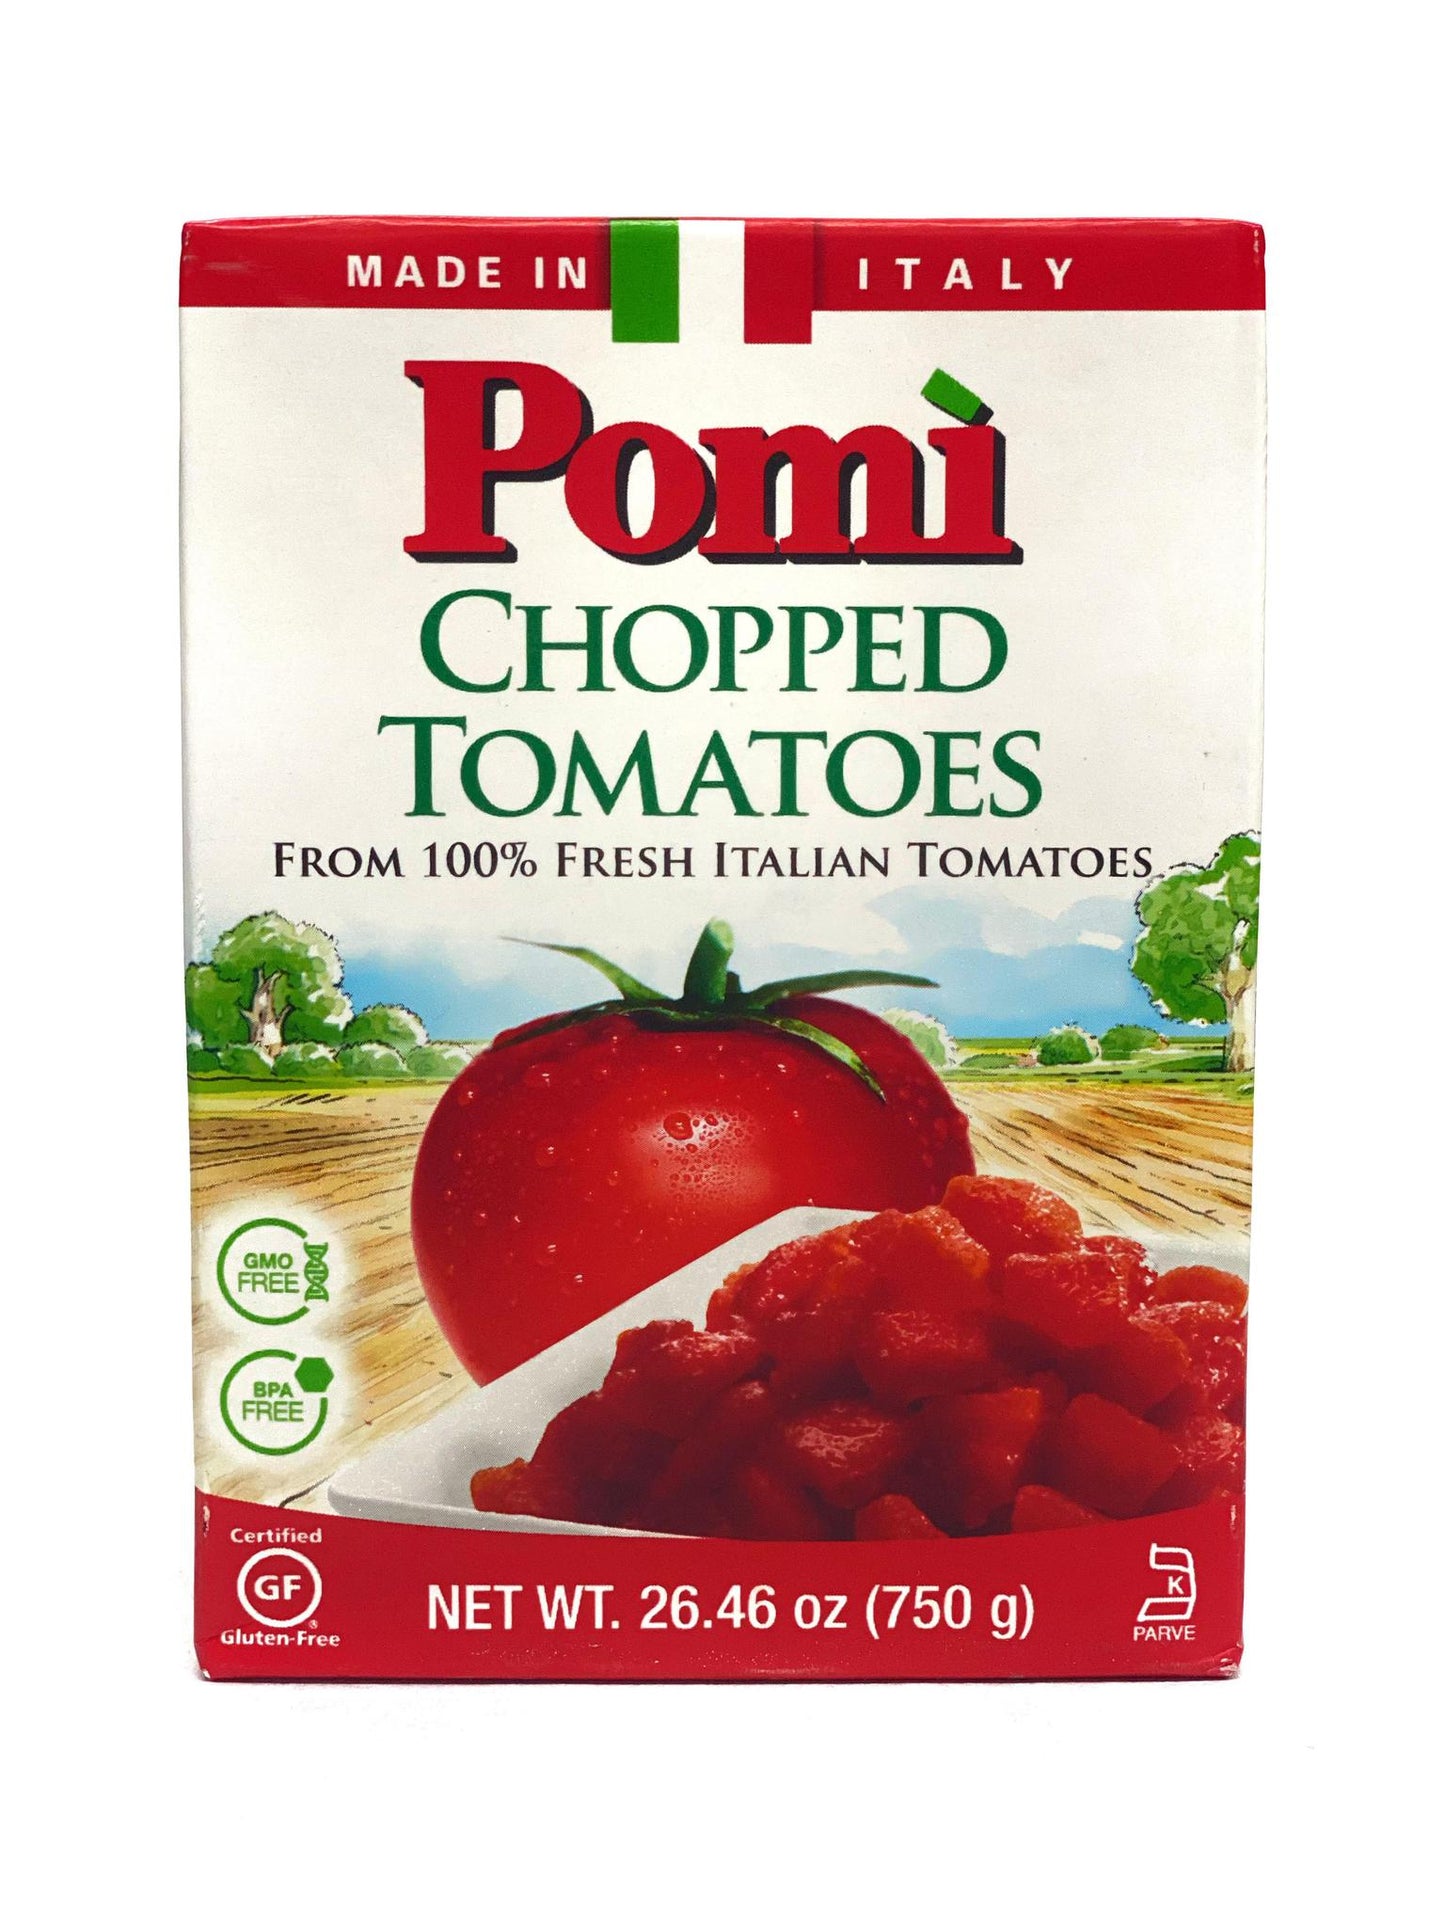 Pomi Chopped Tomatoes, 26.46 oz